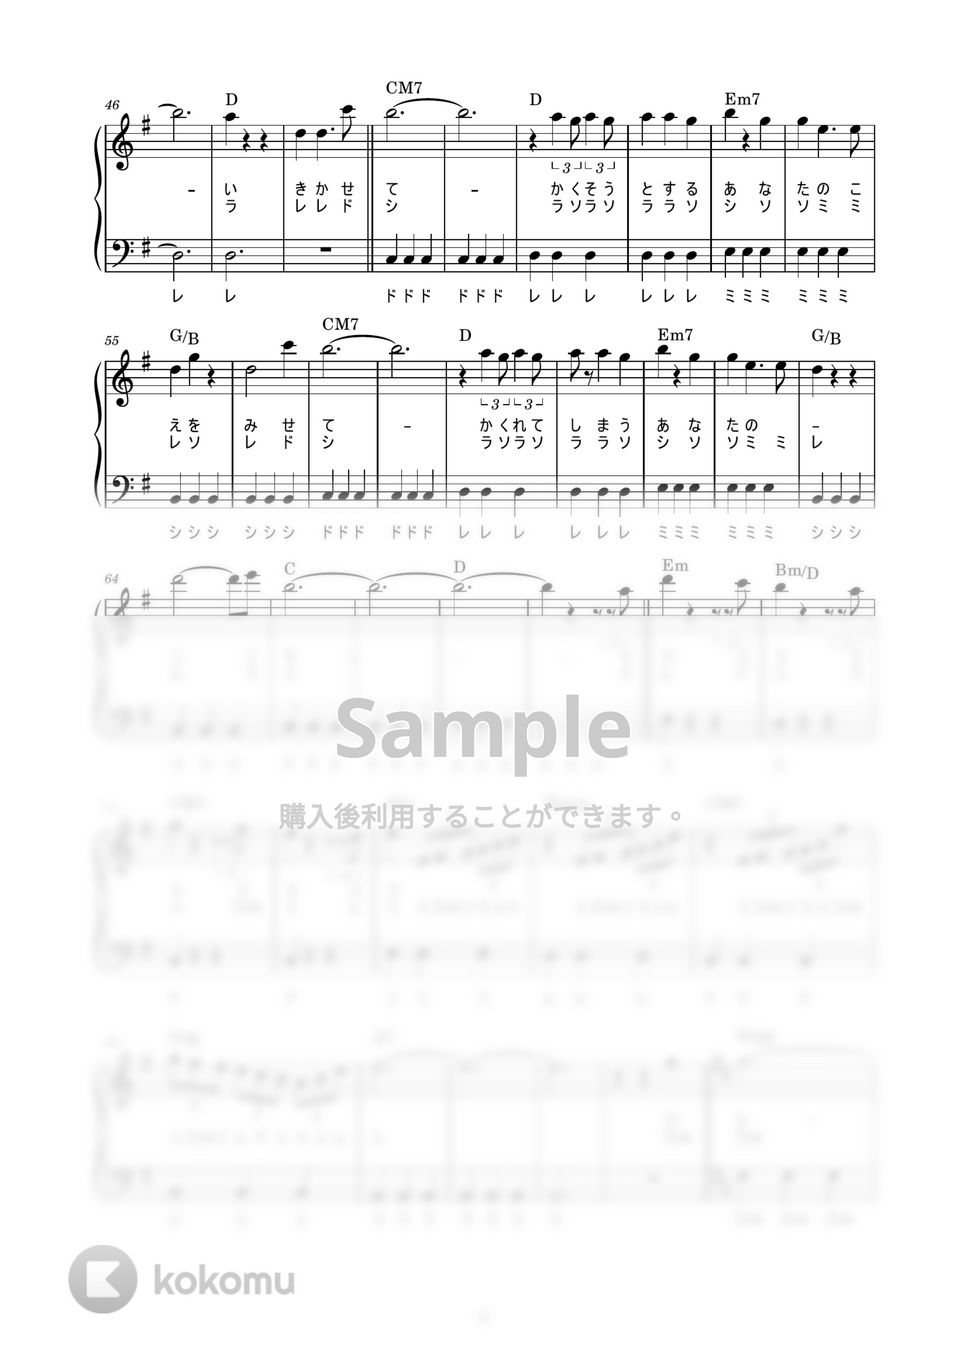 Belle - 心のそばに (かんたん / 歌詞付き / ドレミ付き / 初心者) by piano.tokyo